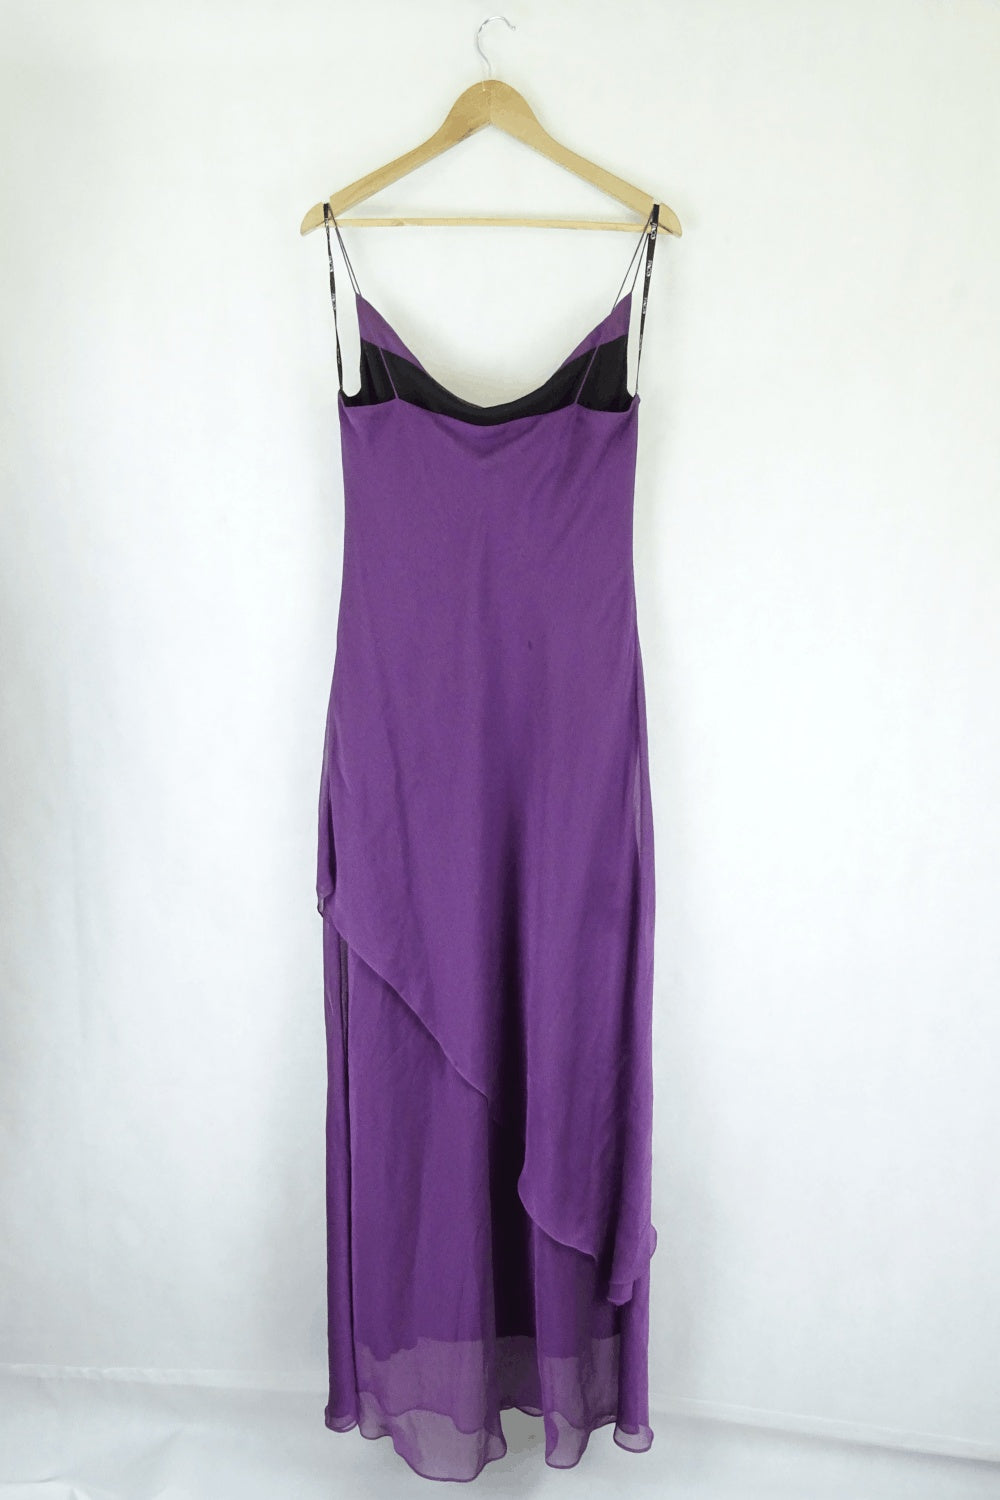 Paco Purple Dress 14